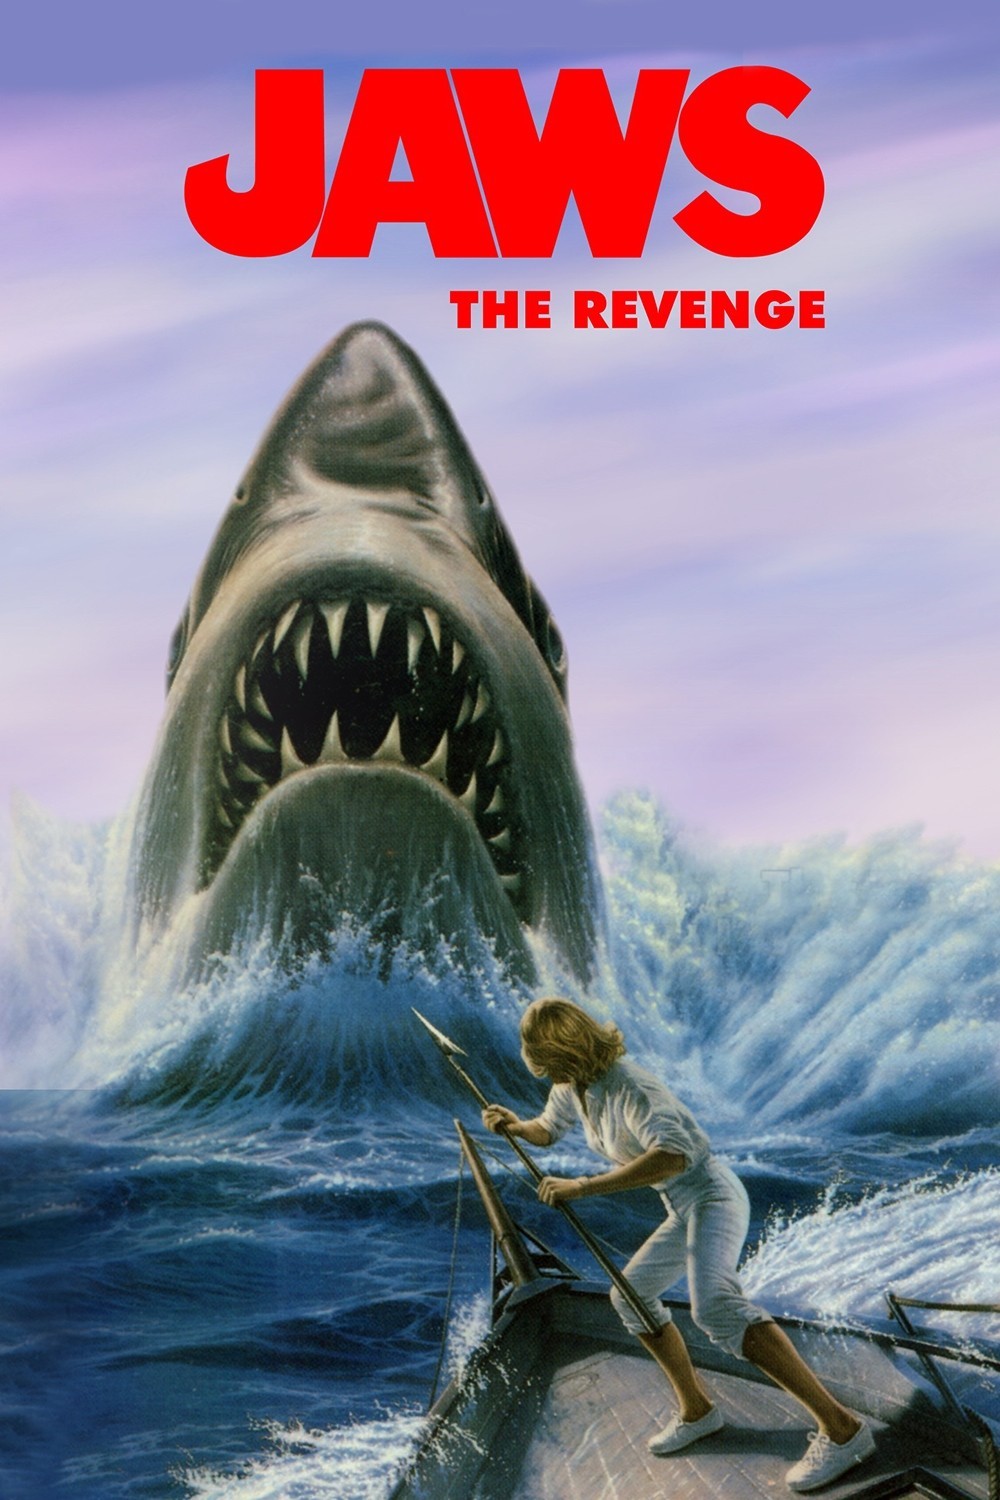 Jaws The Revenge (Tiburon 4 La Venganza) movie releases